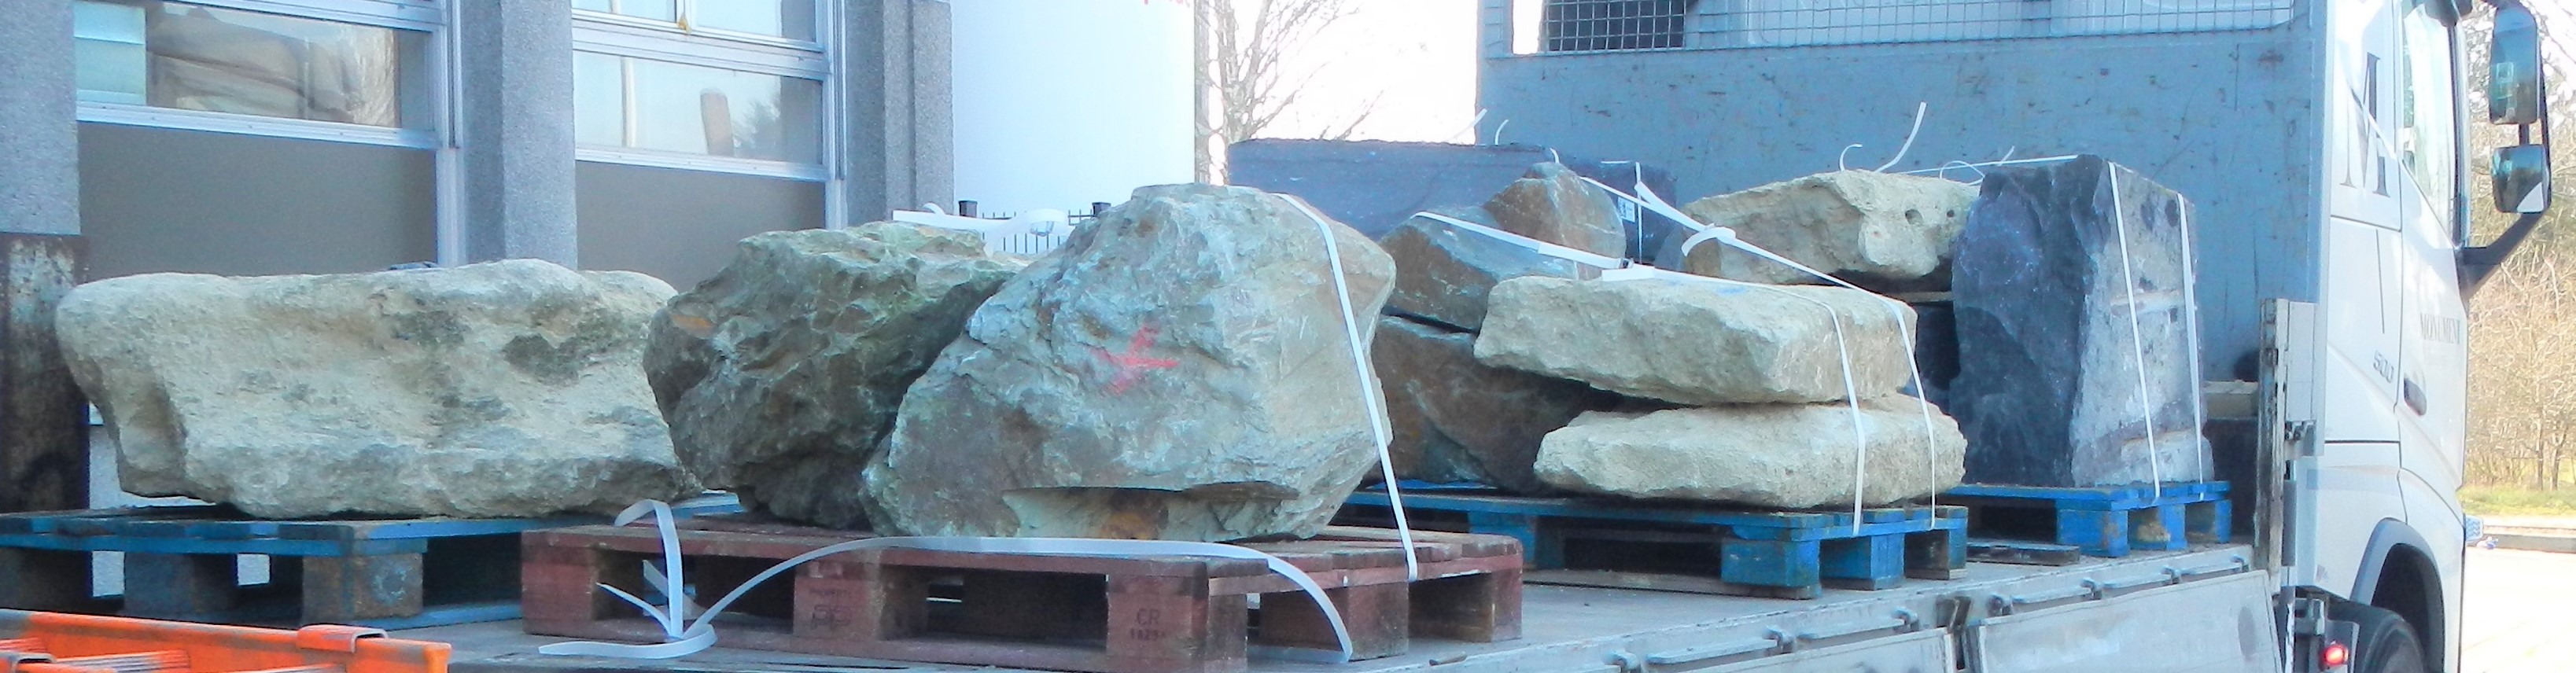 Rock Garden blocks being delivered to Campus Sterre on pallets.